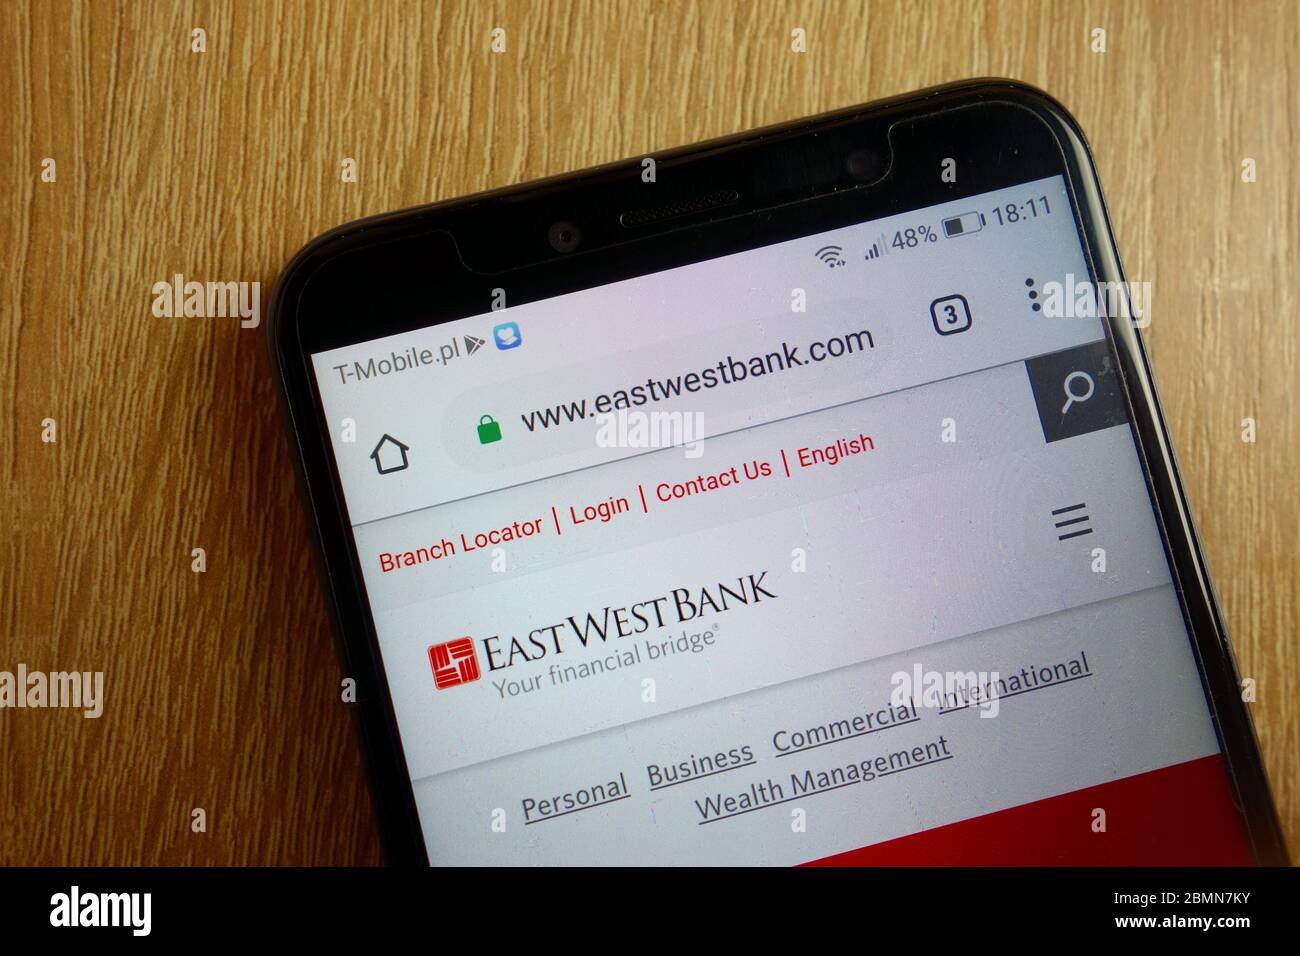 East West Bank website (www.eastwestbank.com) displayed on smartphone Stock Photo